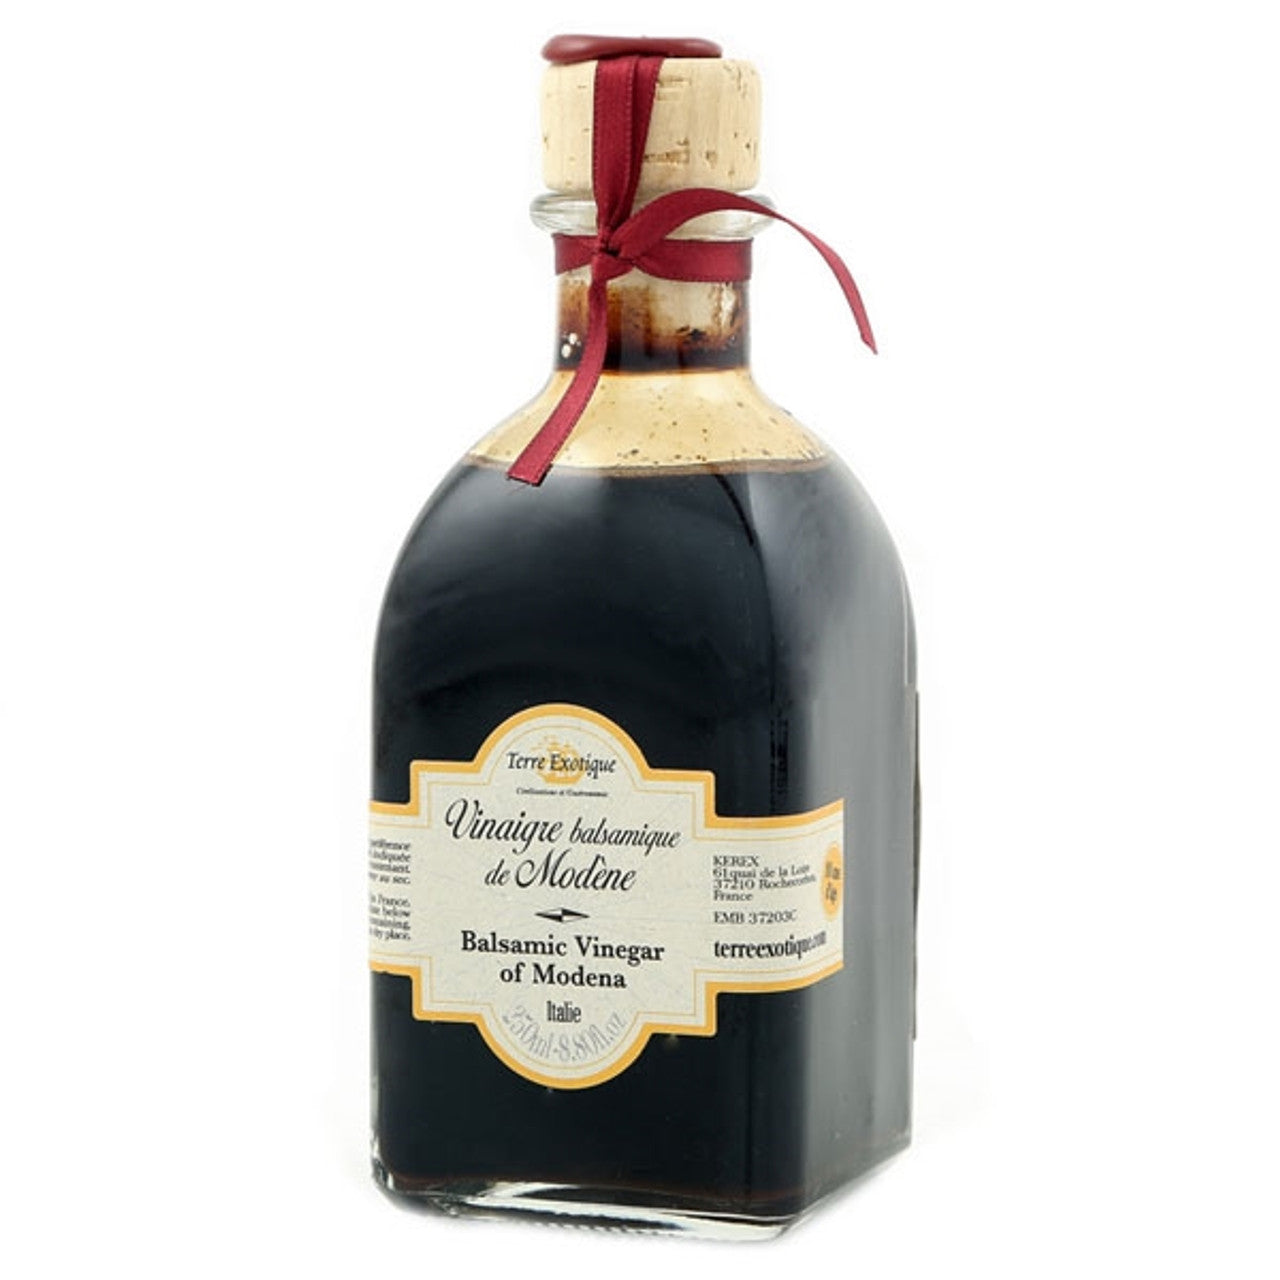 Terre Exotique Balsamic Vinegar Aged 10 Years, 8.5 fl. oz